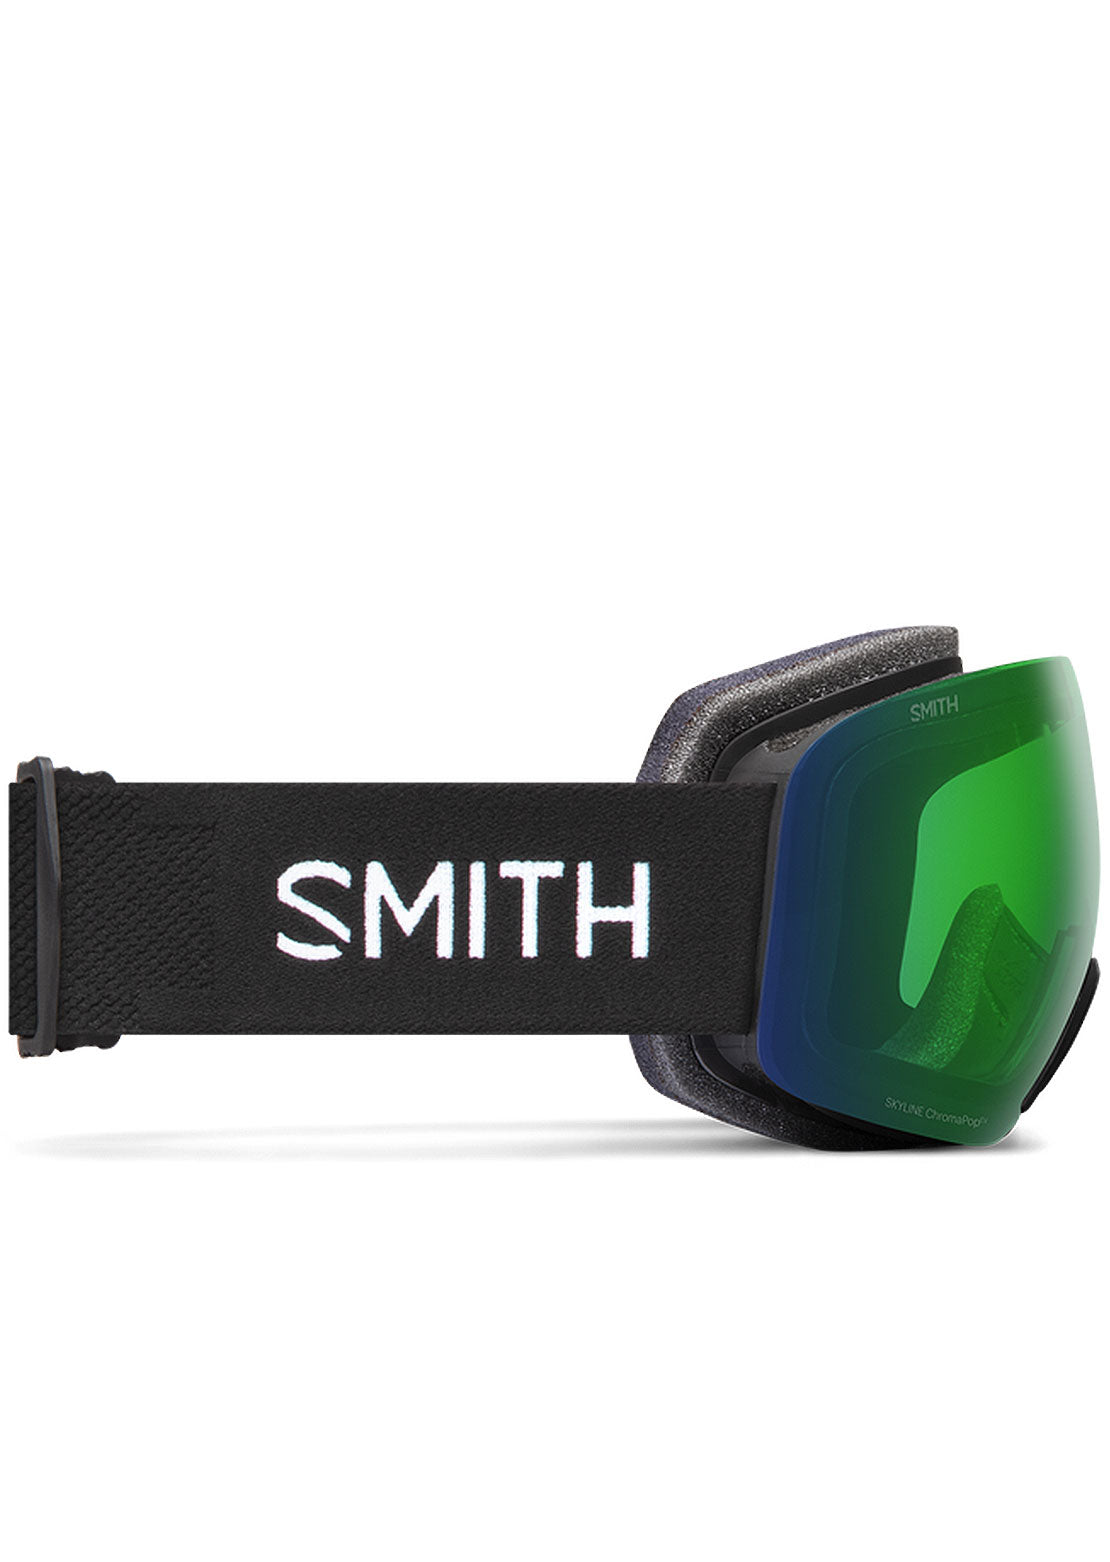 Smith Skyline Goggles Black/ChromaPop Everyday Green Mirror